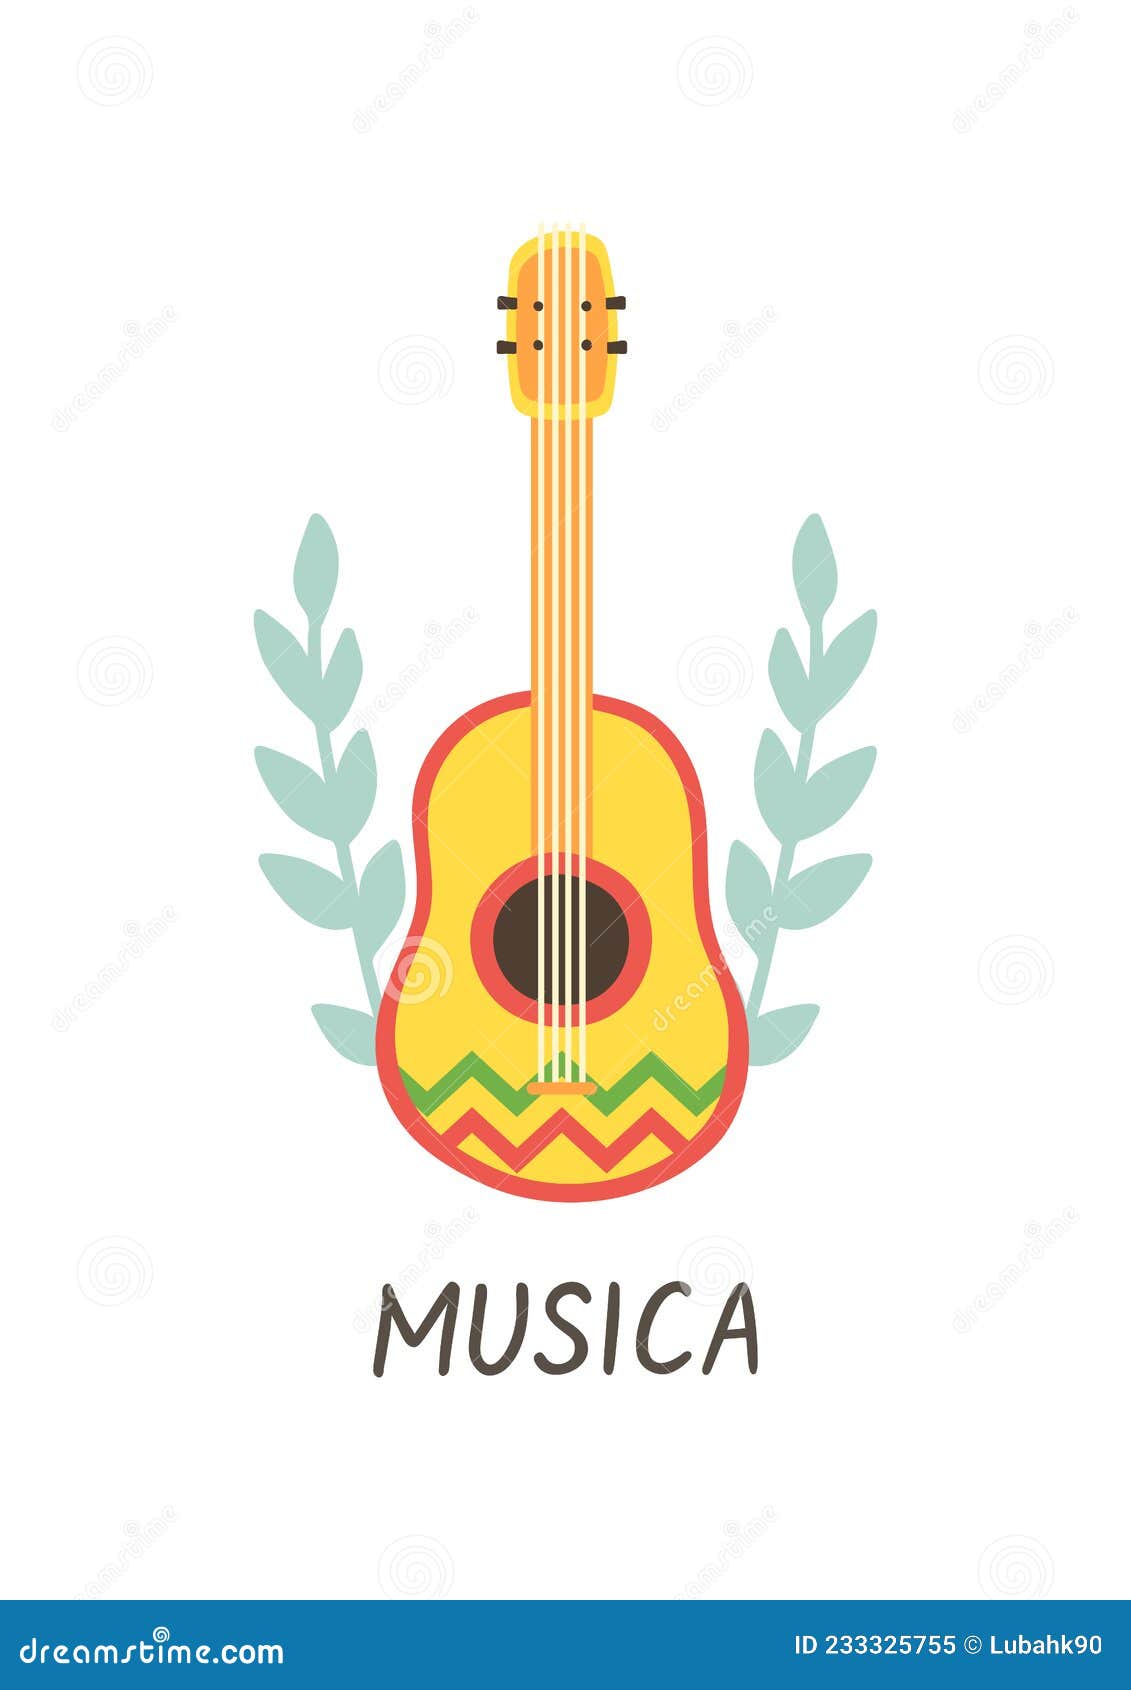 mexico musica culture print. mariachi logo. hand drawn guitar icon. day of the dead card. dia de los muertos poster